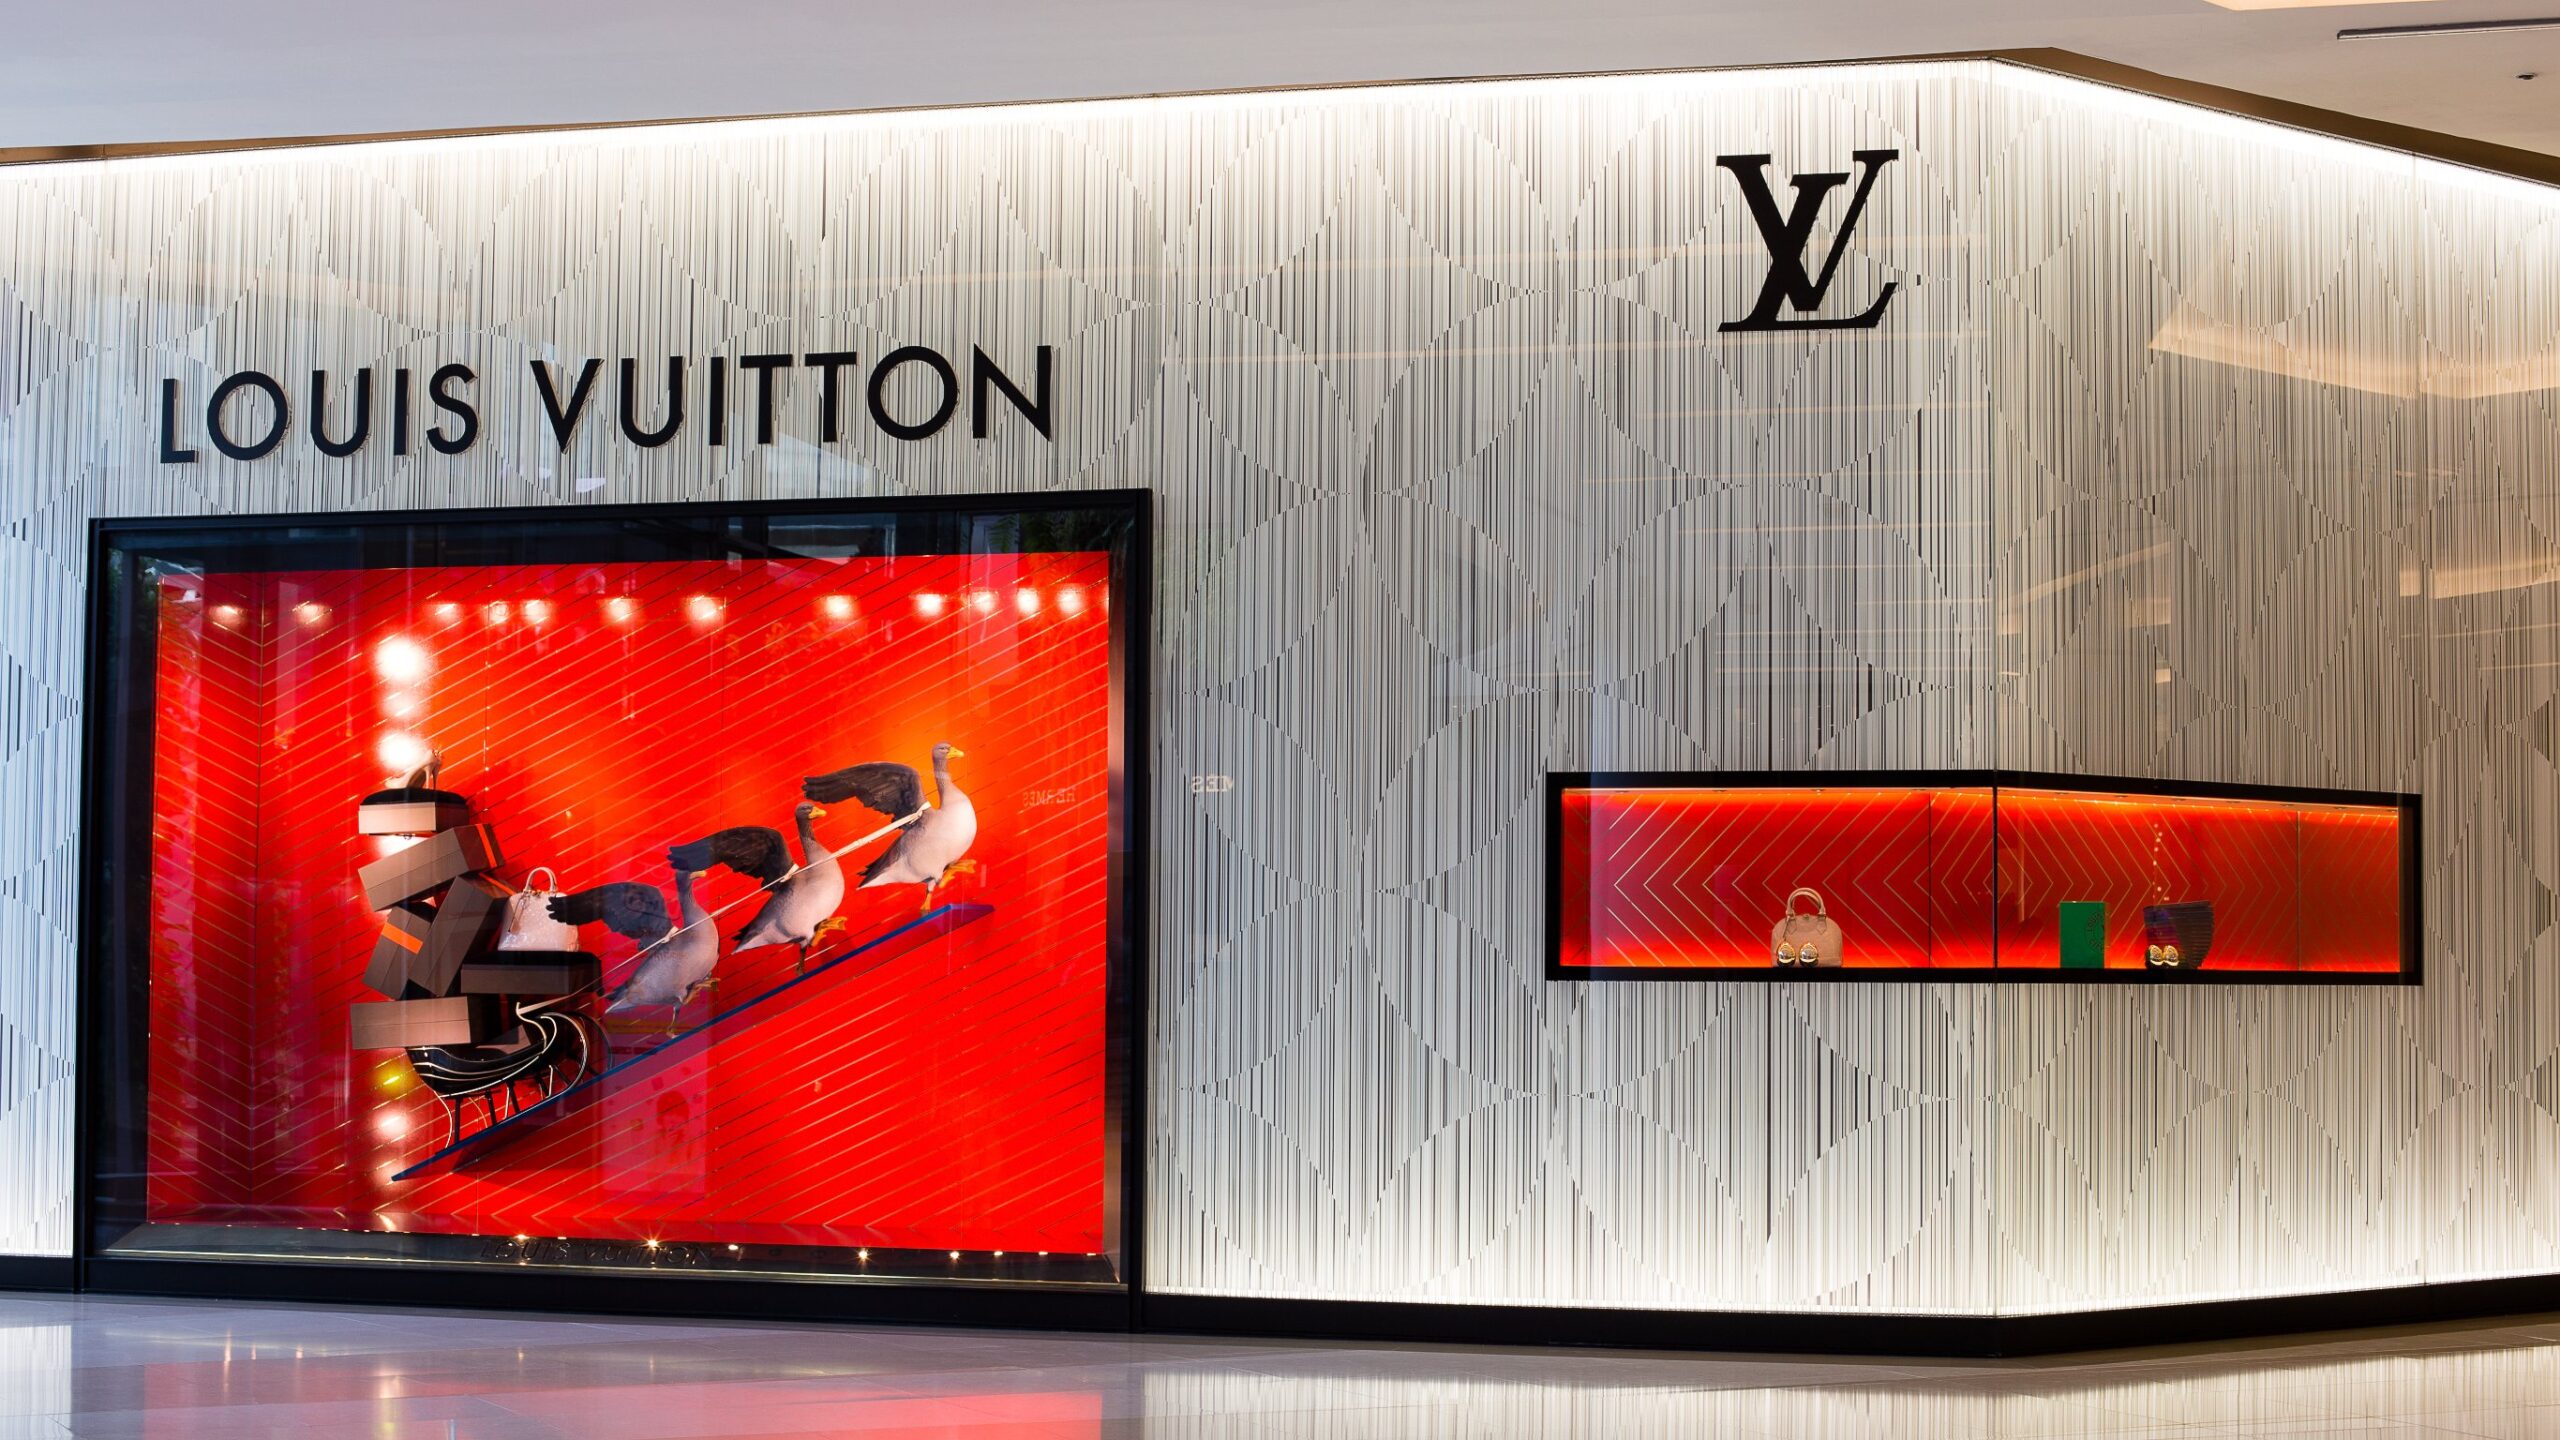 Decoding The Marketing Mix Of Louis Vuitton